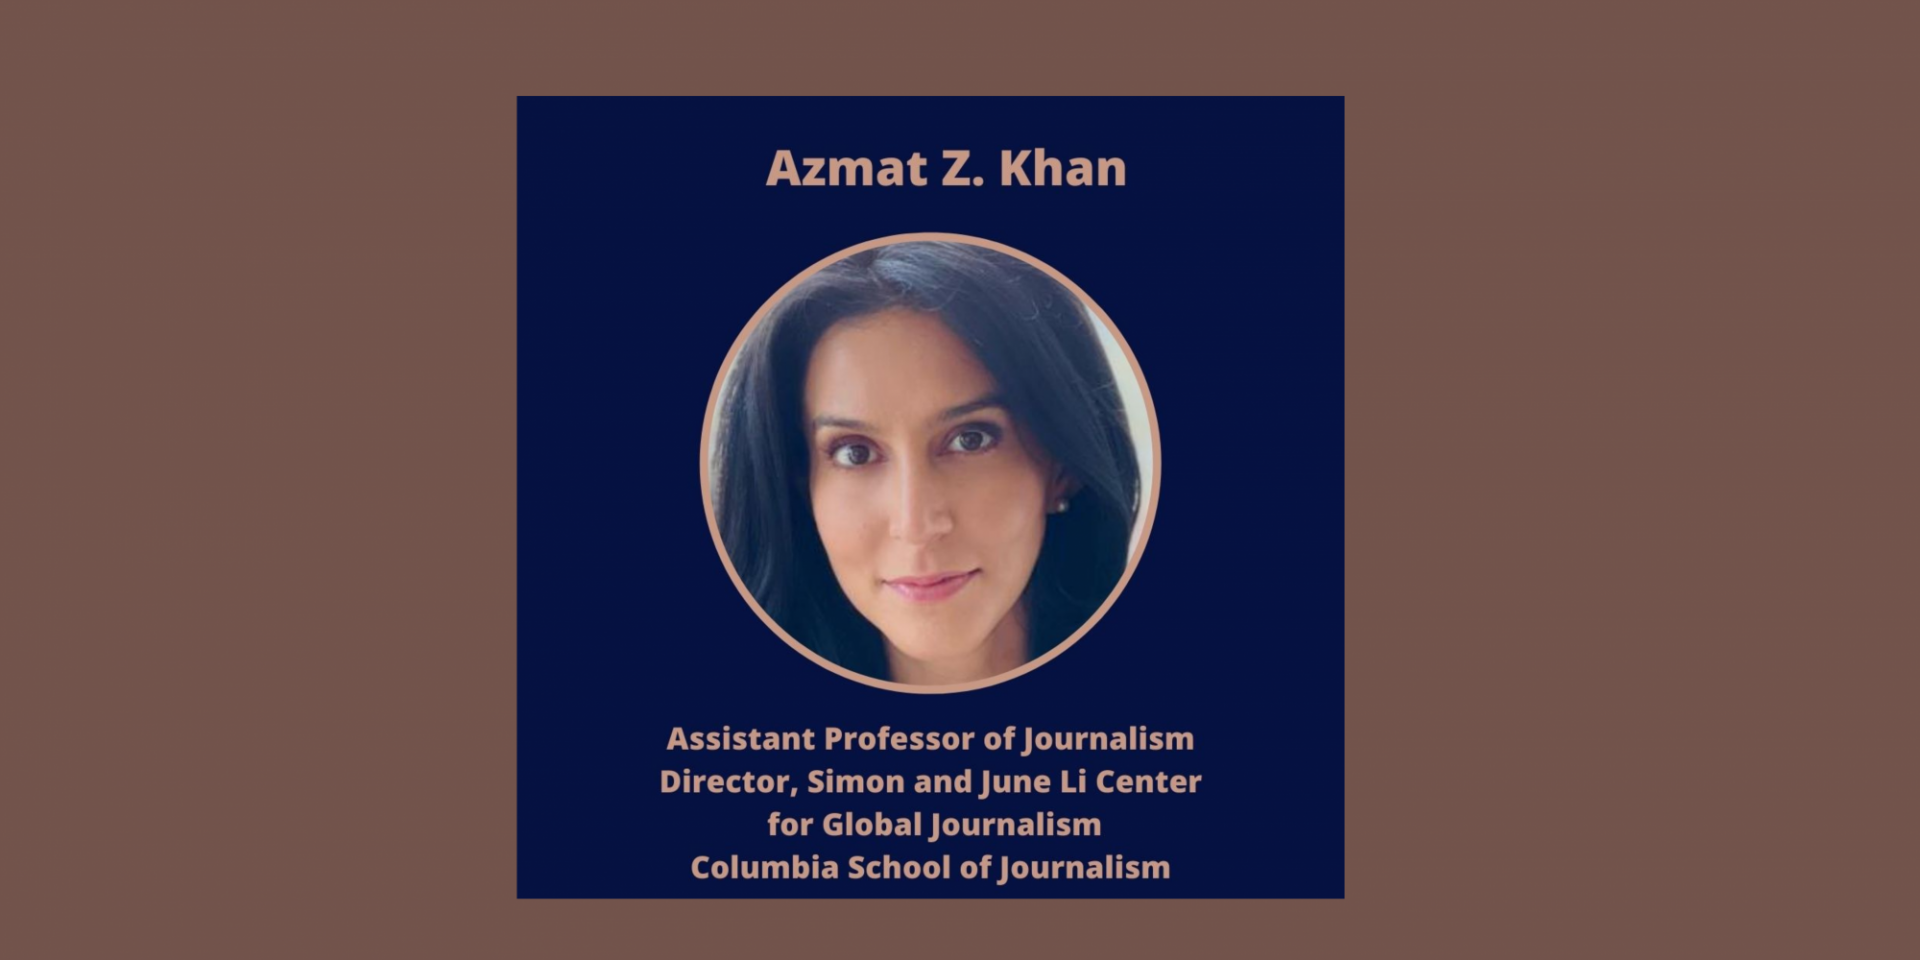 Azmat Z. Khan 
Columbia University
Patti Cadby Birch Assistant Professor of Journalism and Director, Simon and June Li Center for Global Journalism
